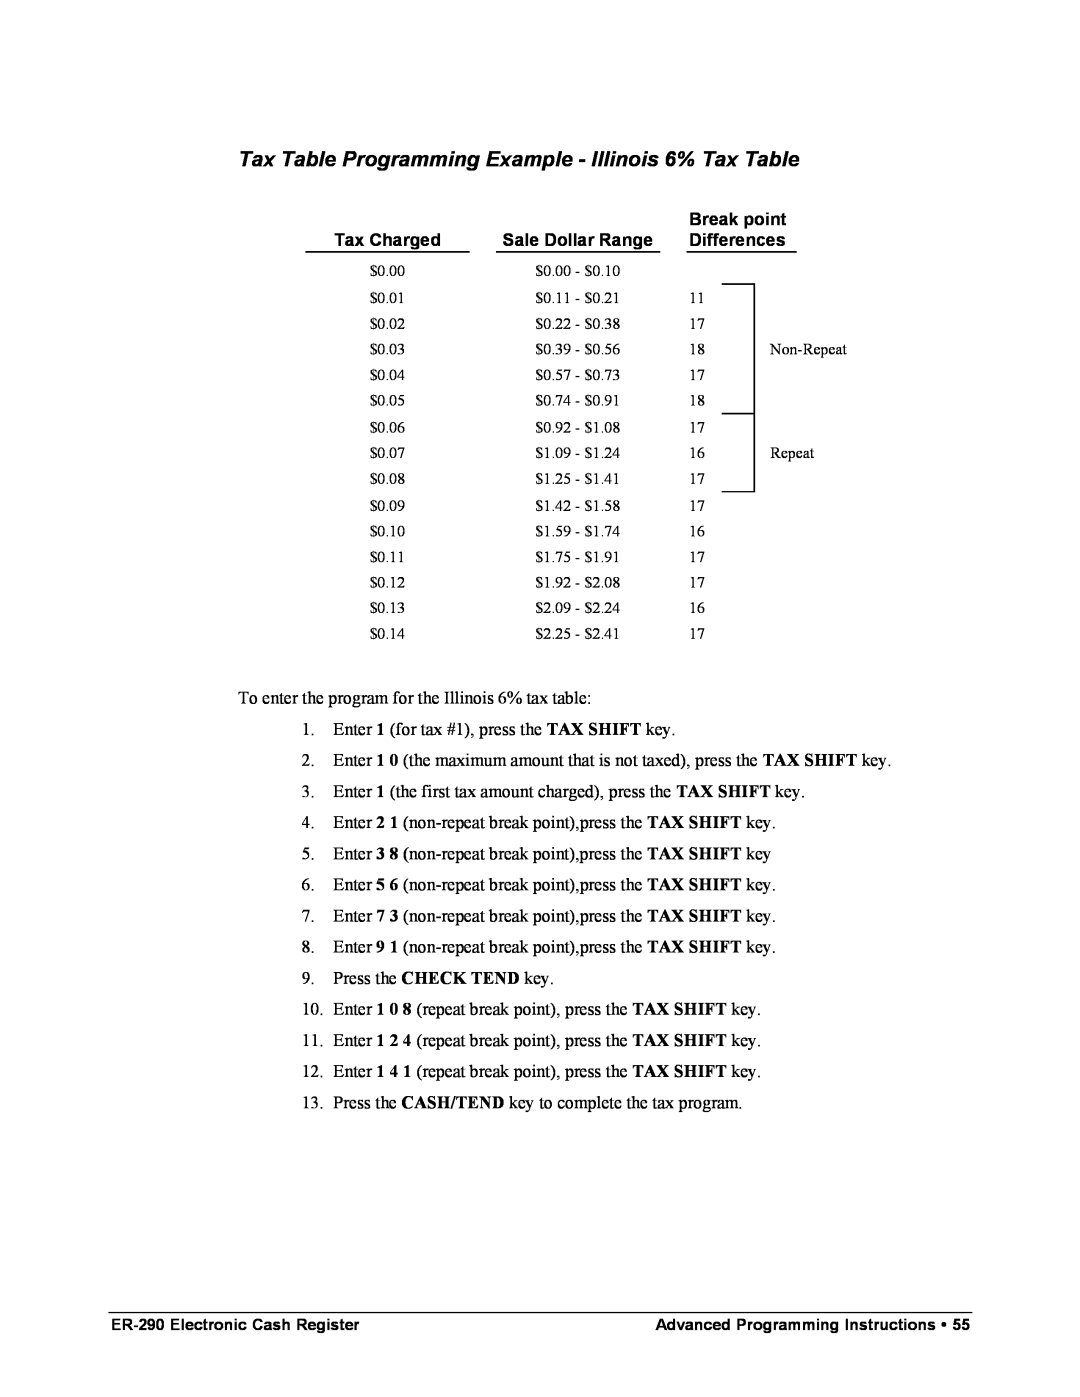 Samsung M-ER290 Tax Table Programming Example - Illinois 6% Tax Table, Tax Charged, Break point, Sale Dollar Range 